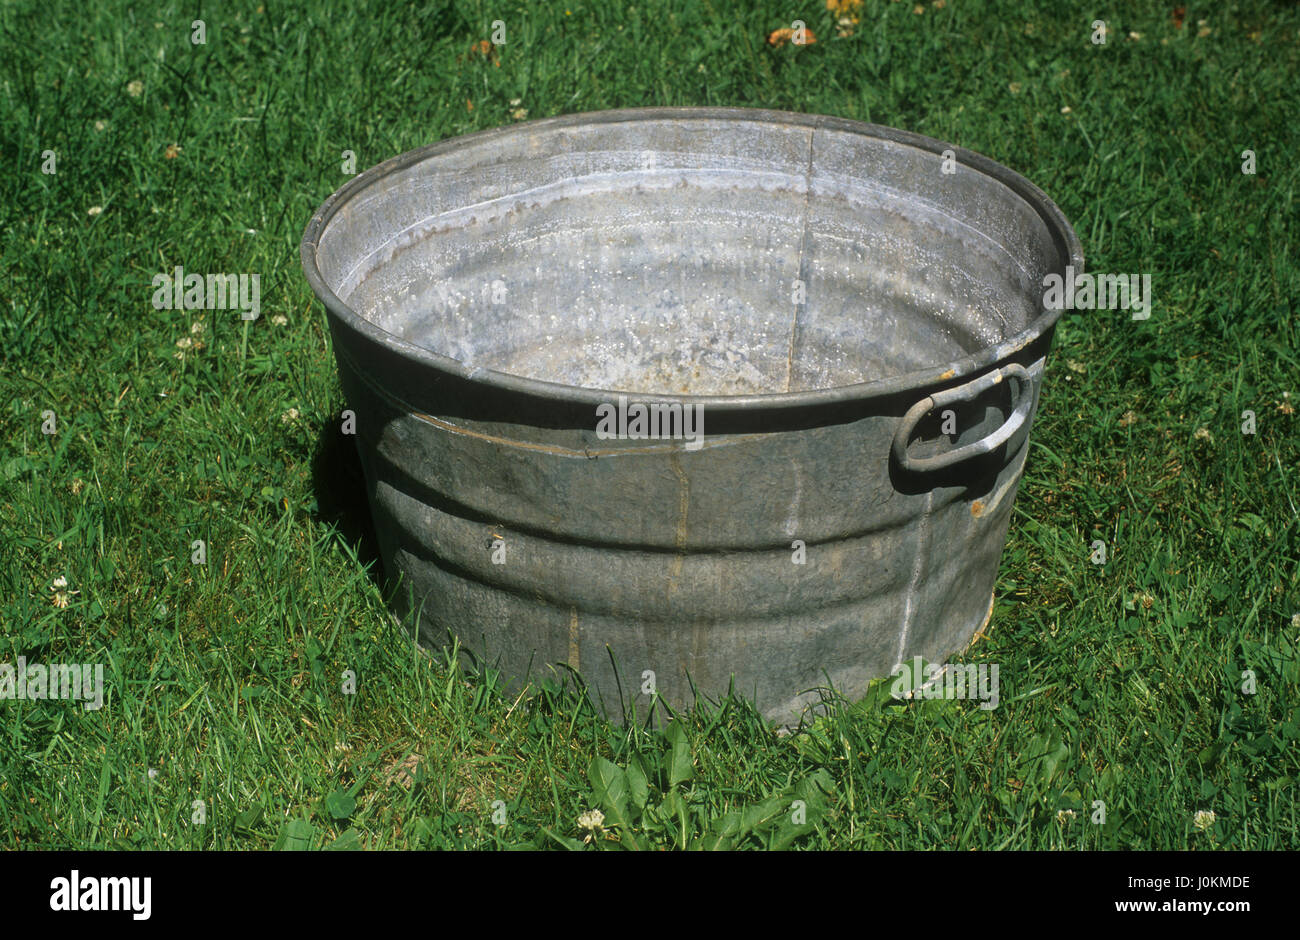 Vintage Galvanized Wash Tub Stock Photo 138116090 Alamy